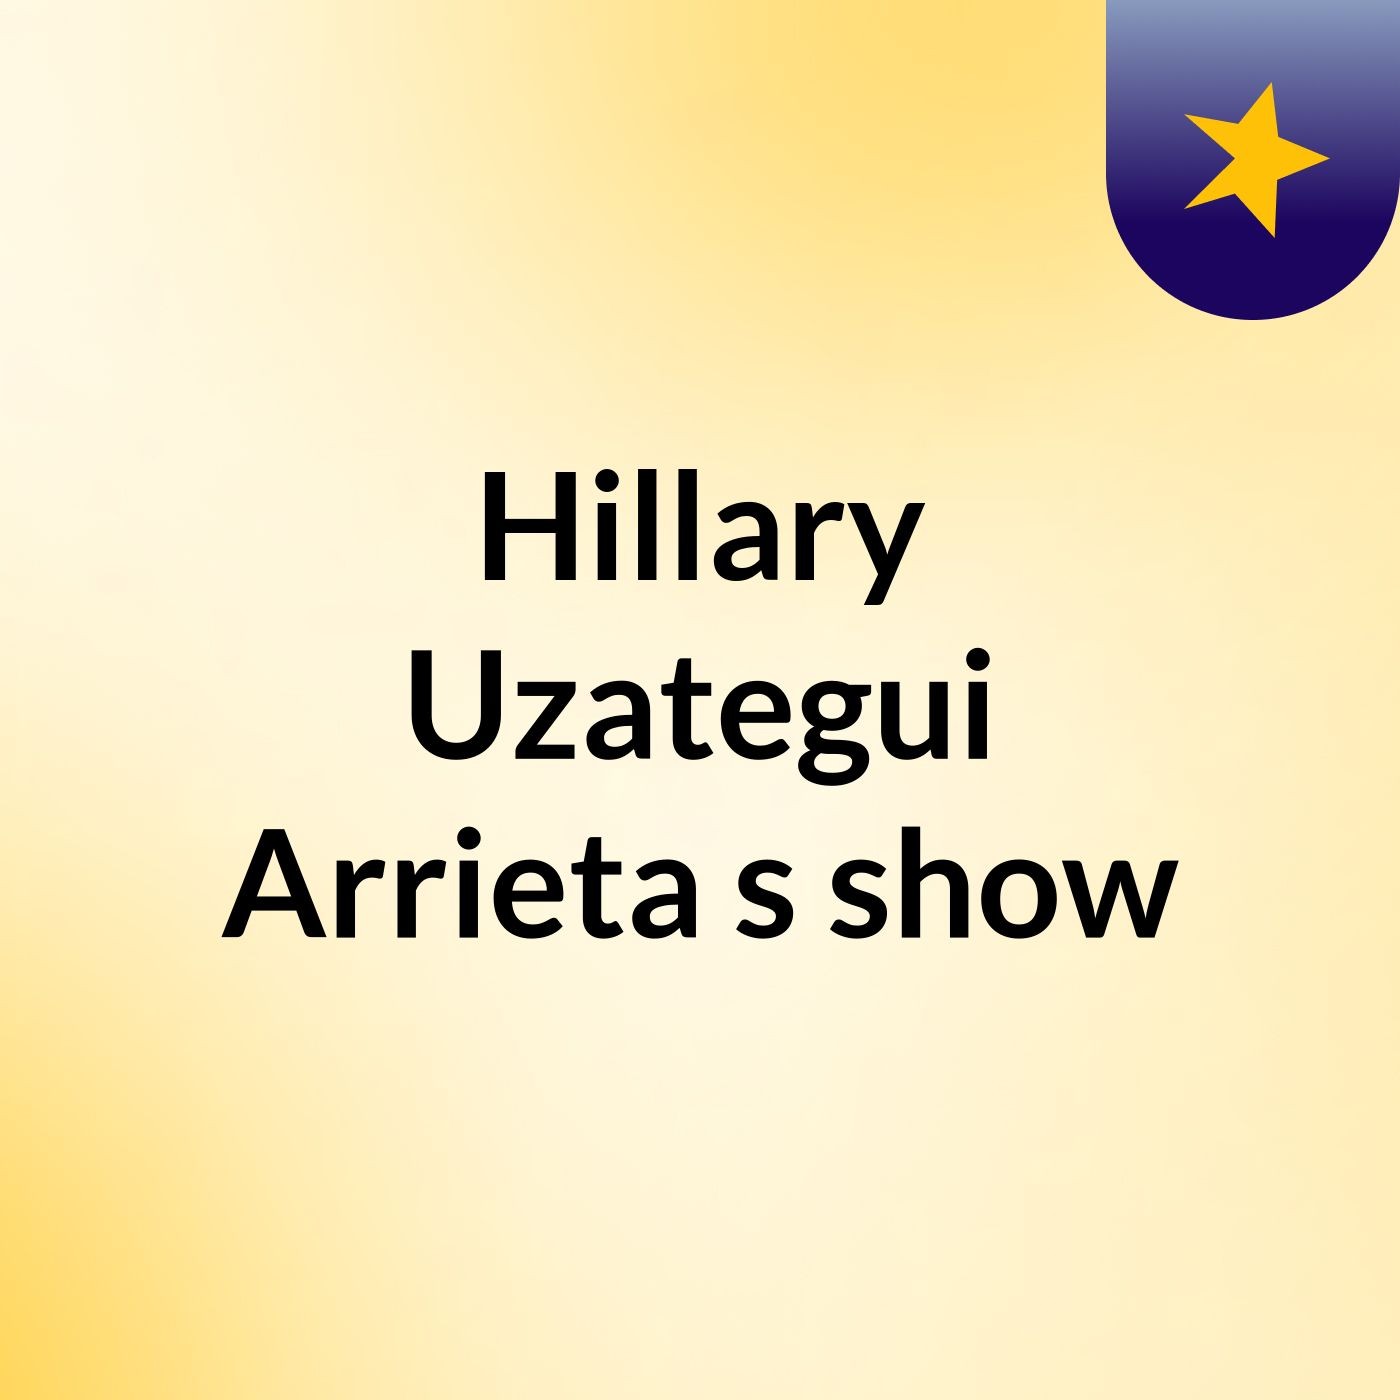 Hillary Uzategui Arrieta's show